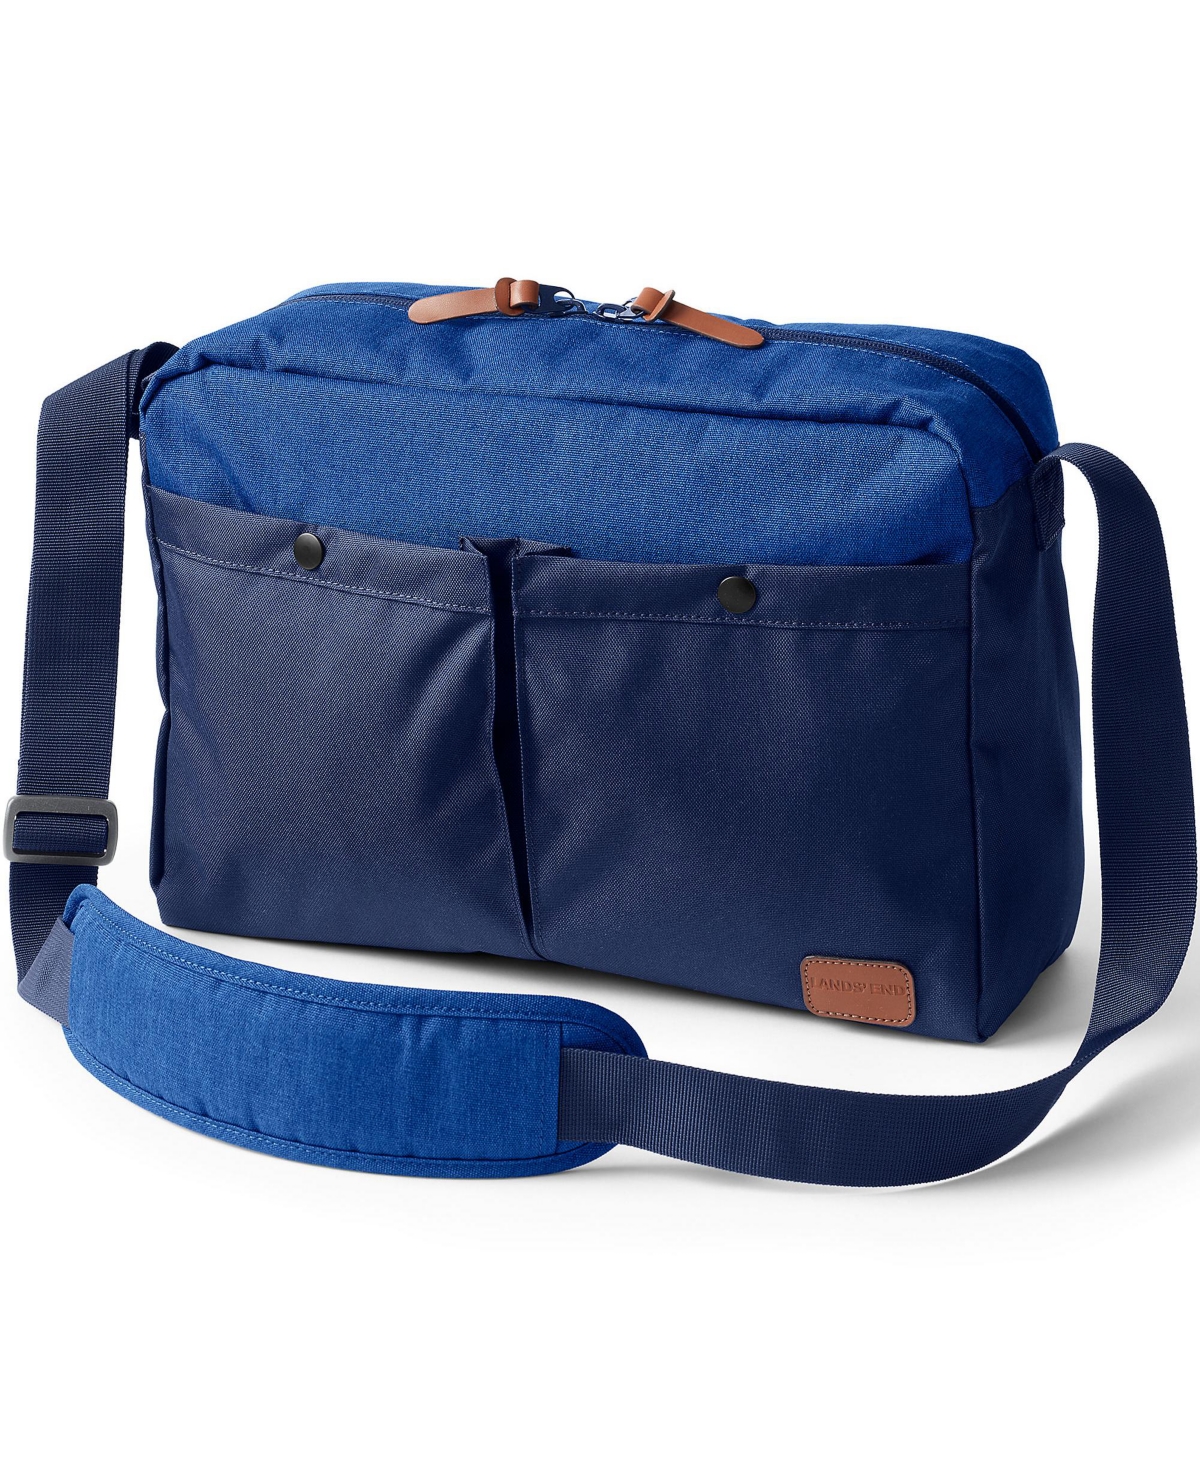 All Purpose Messenger Bag - Light blue twilight heather